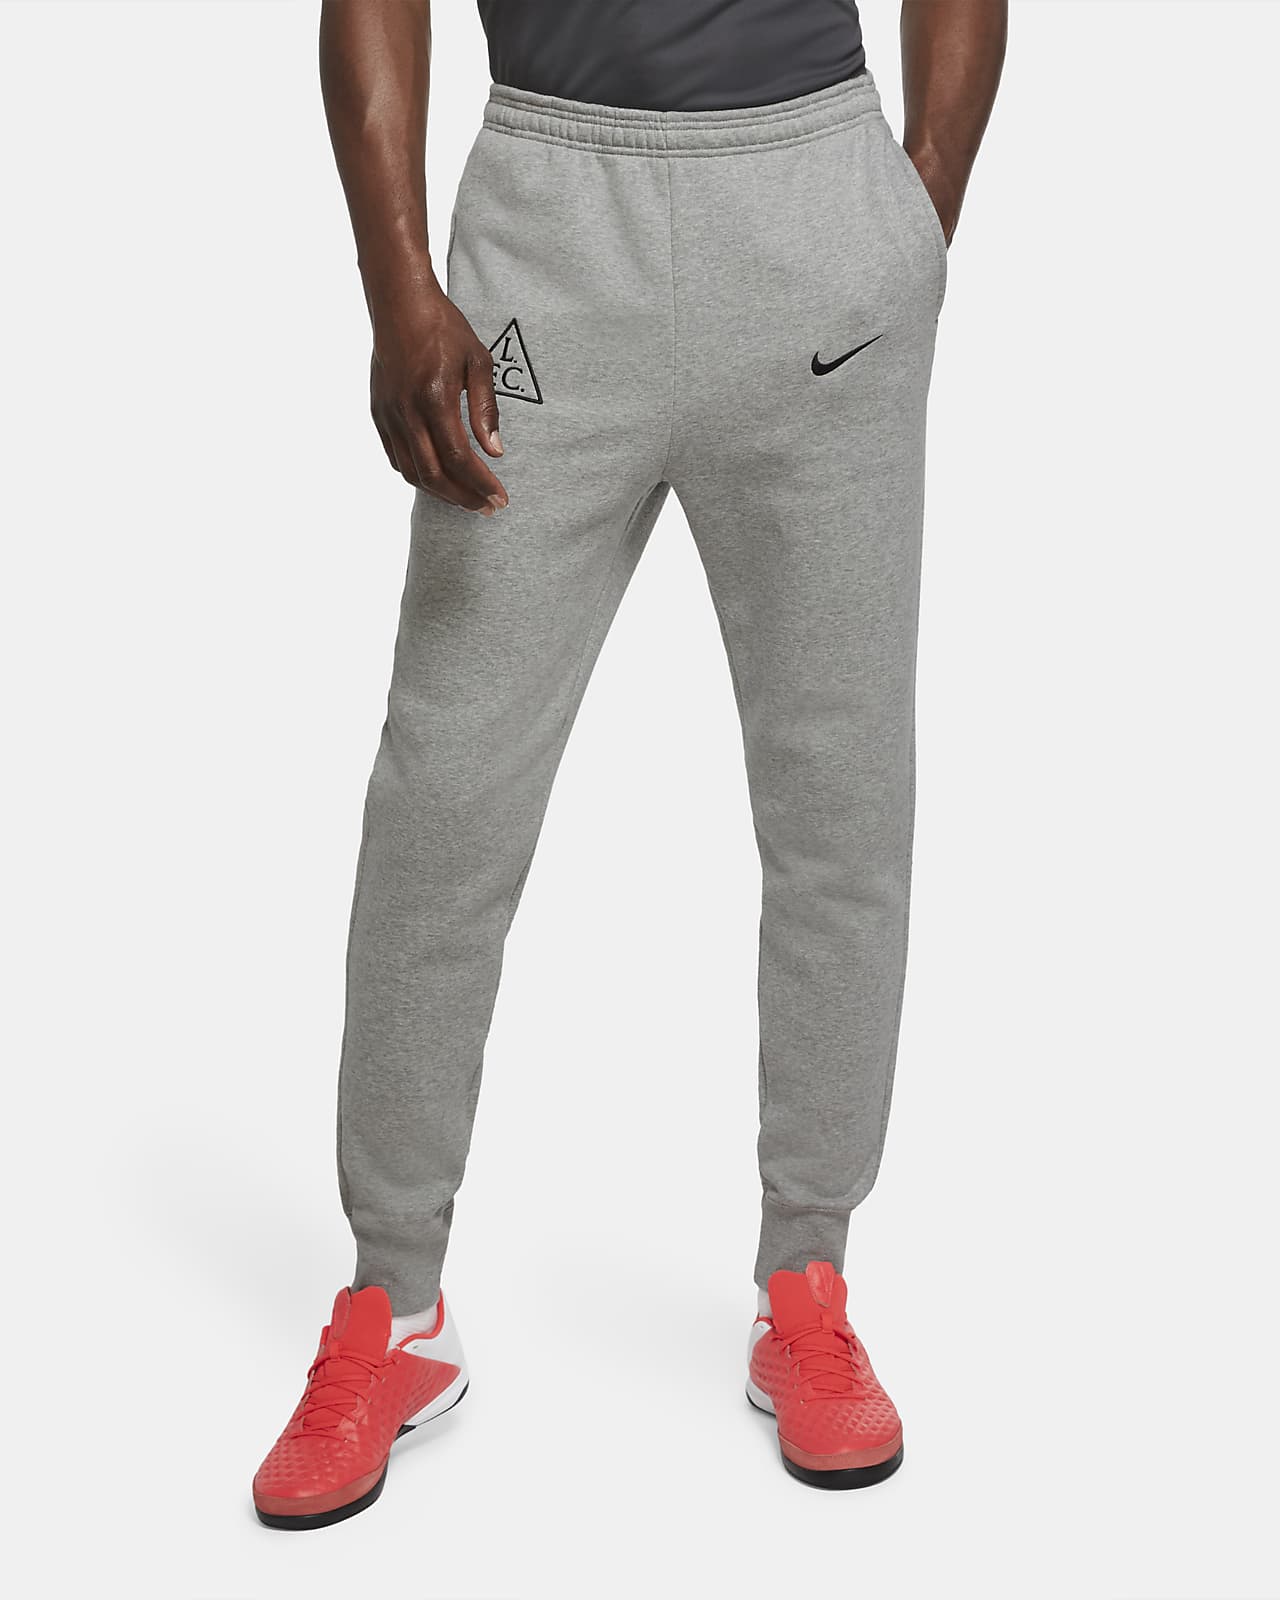 grey soccer pants